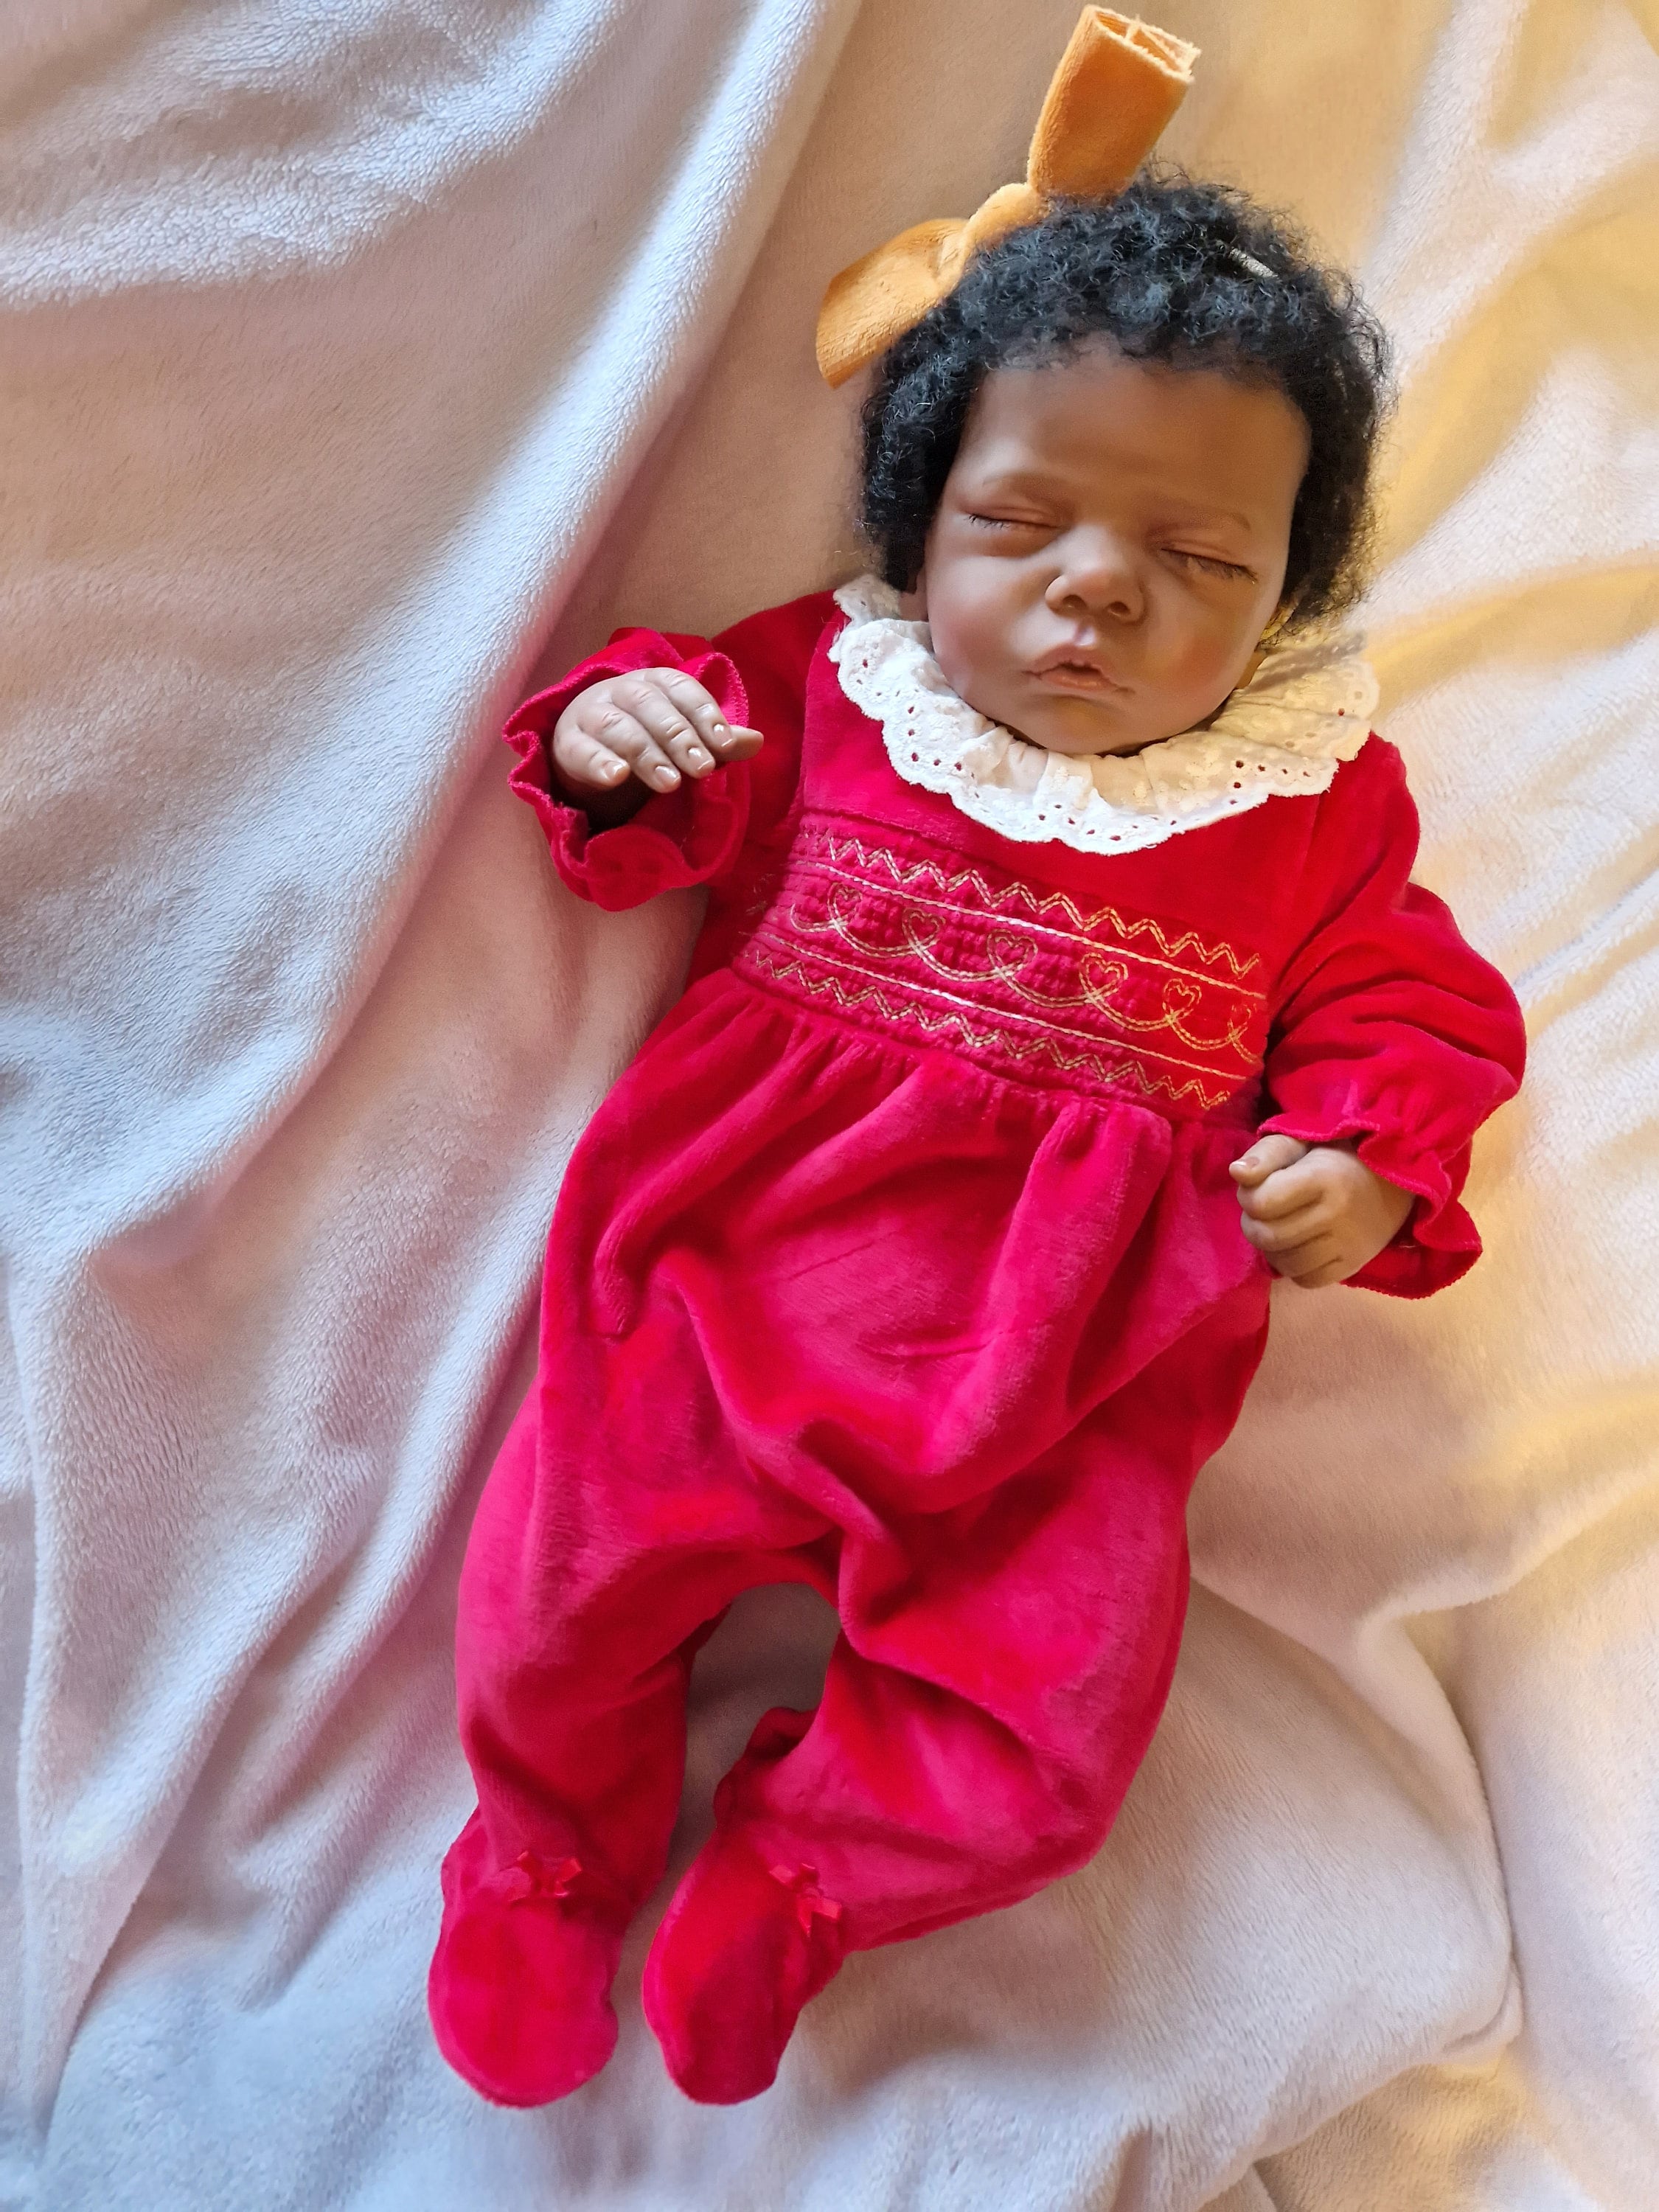  Anano Biracial Baby Doll 19 Inch Reborn Baby Dolls